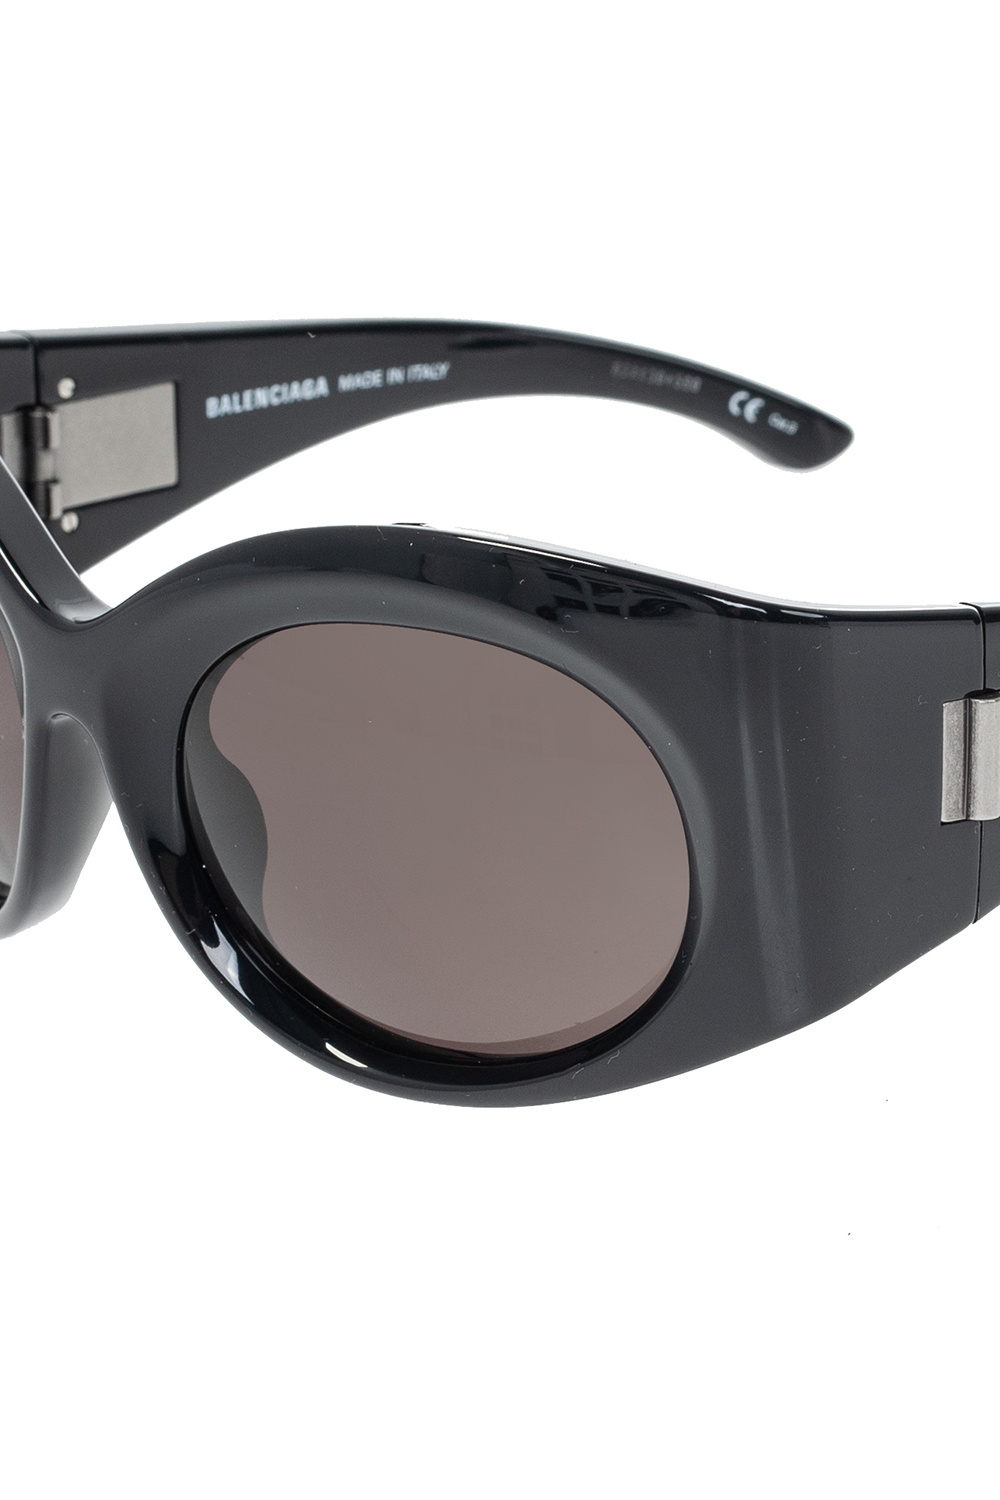 Balenciaga bottega veneta eyewear original 12 round frame sunglasses item